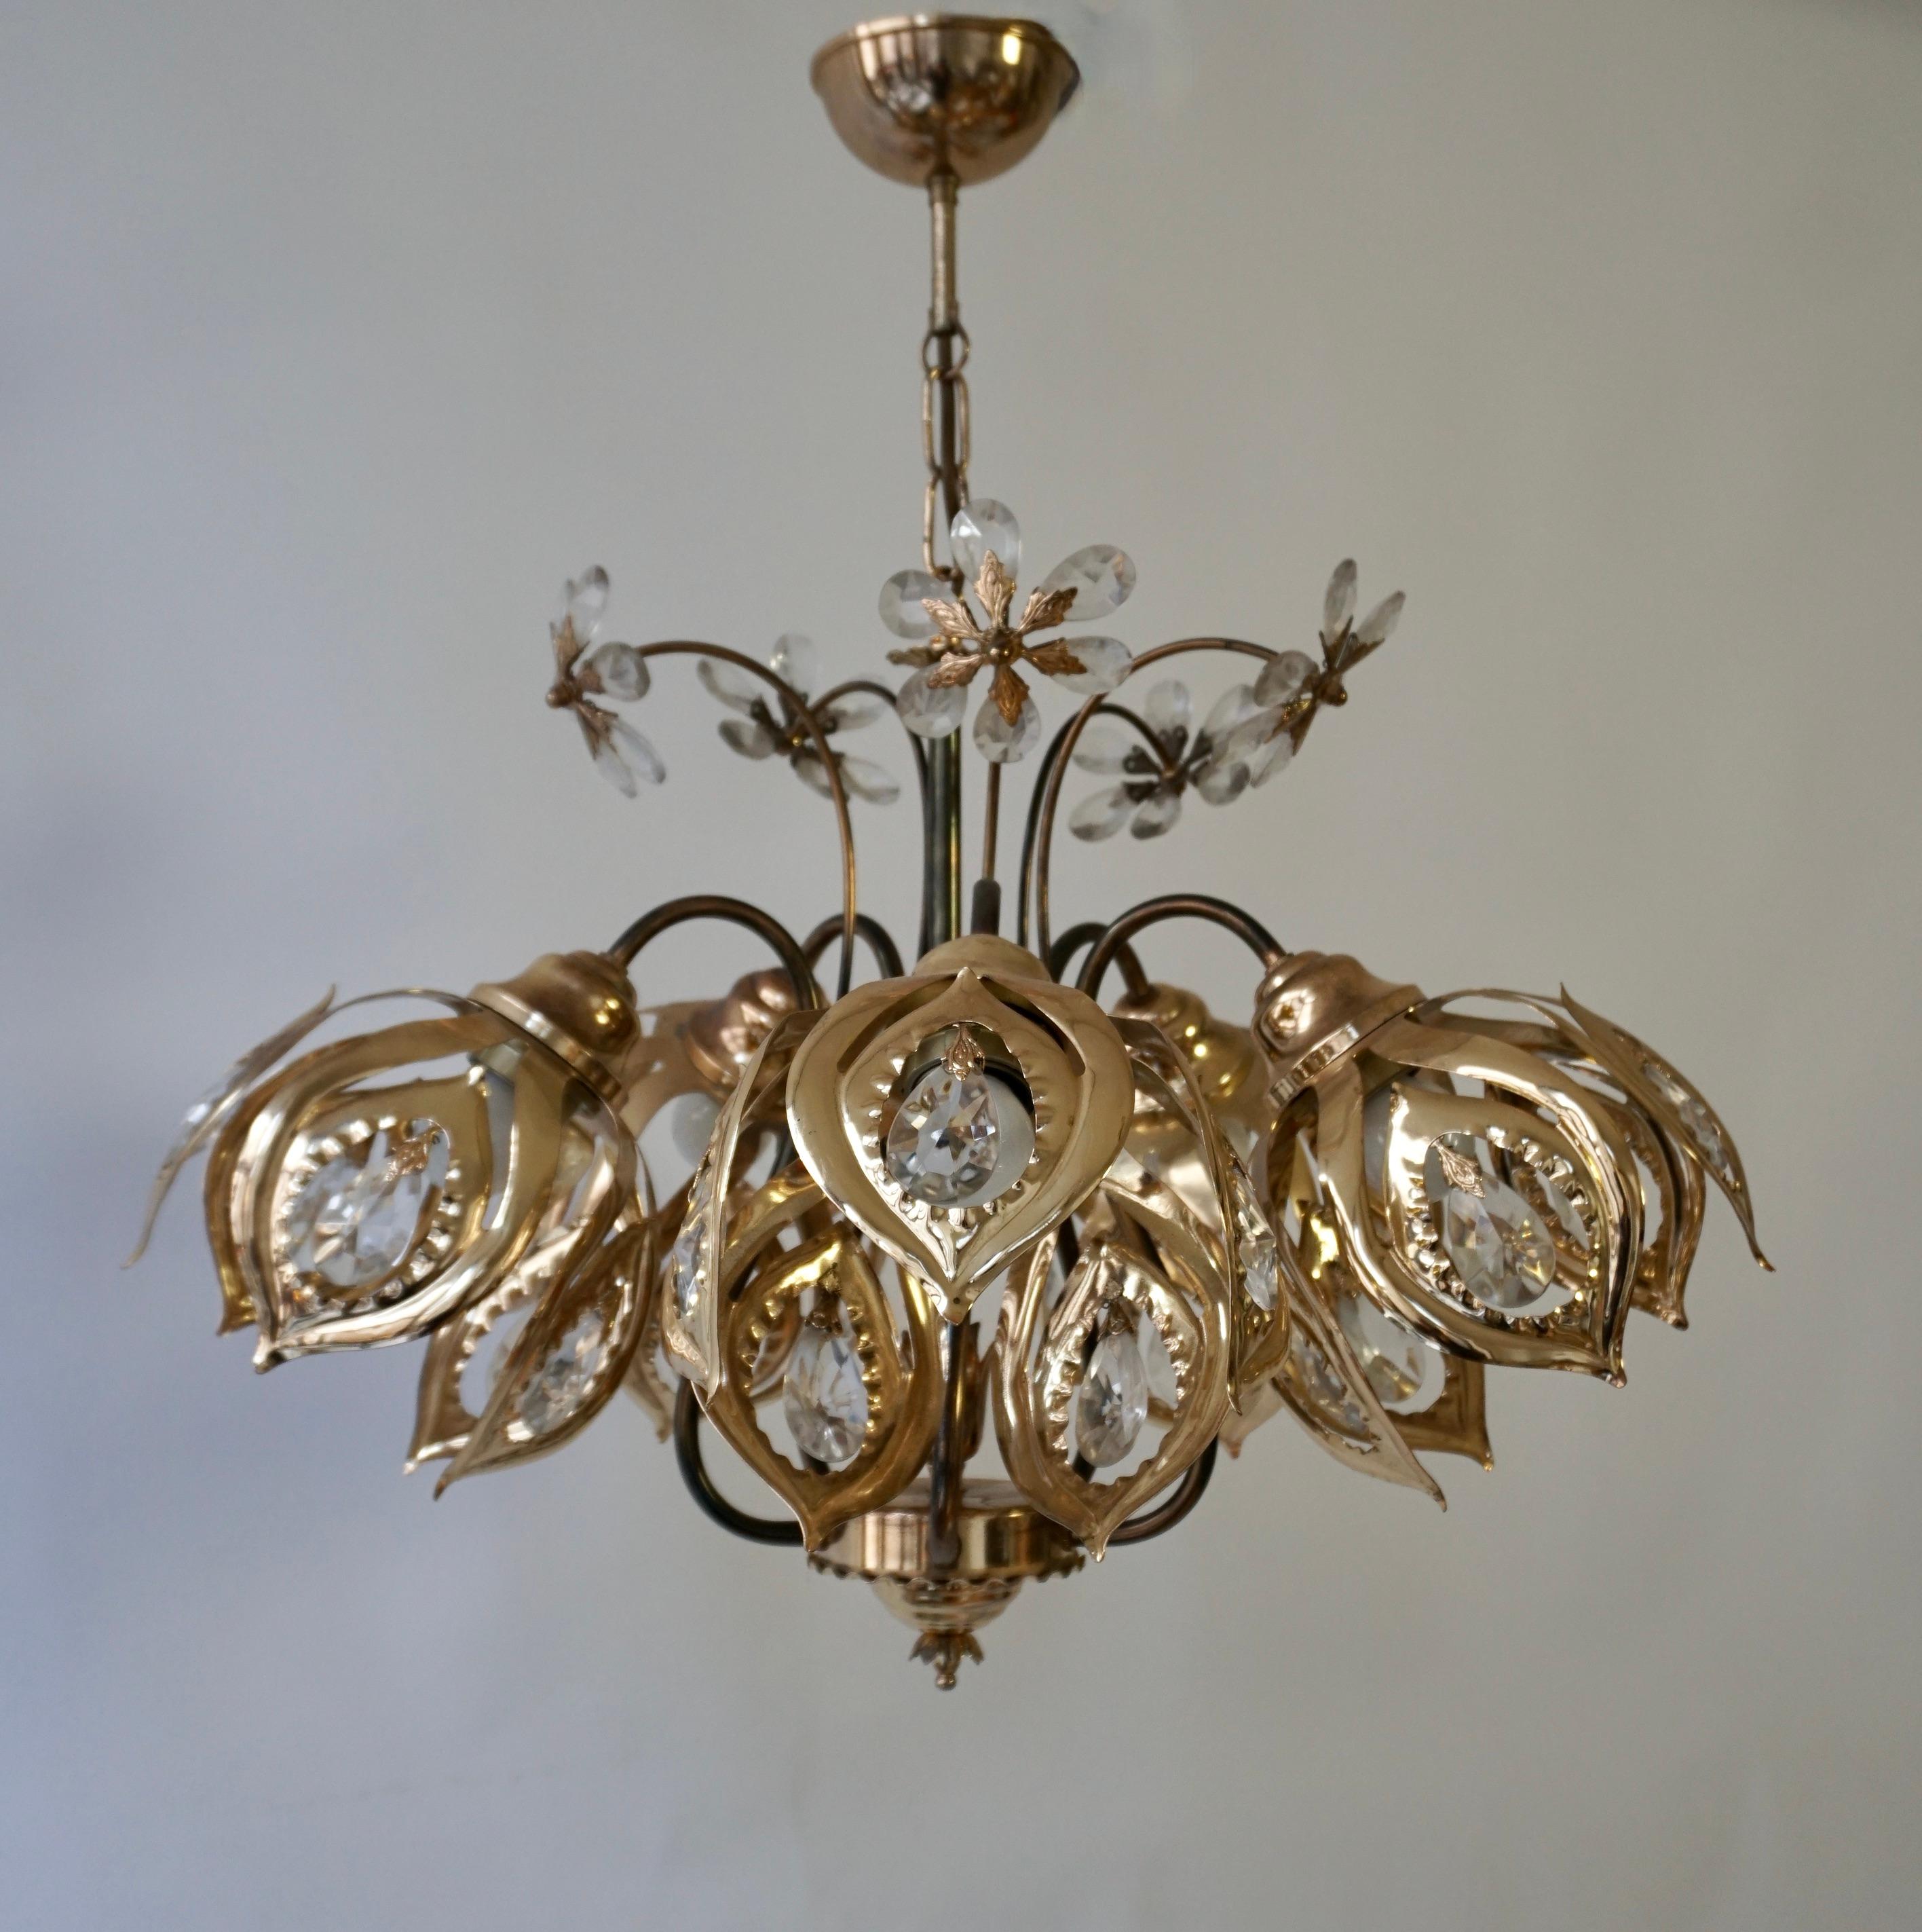 Elegant brass gilded ceiling light with crystal flowers.

Diameter 23.6